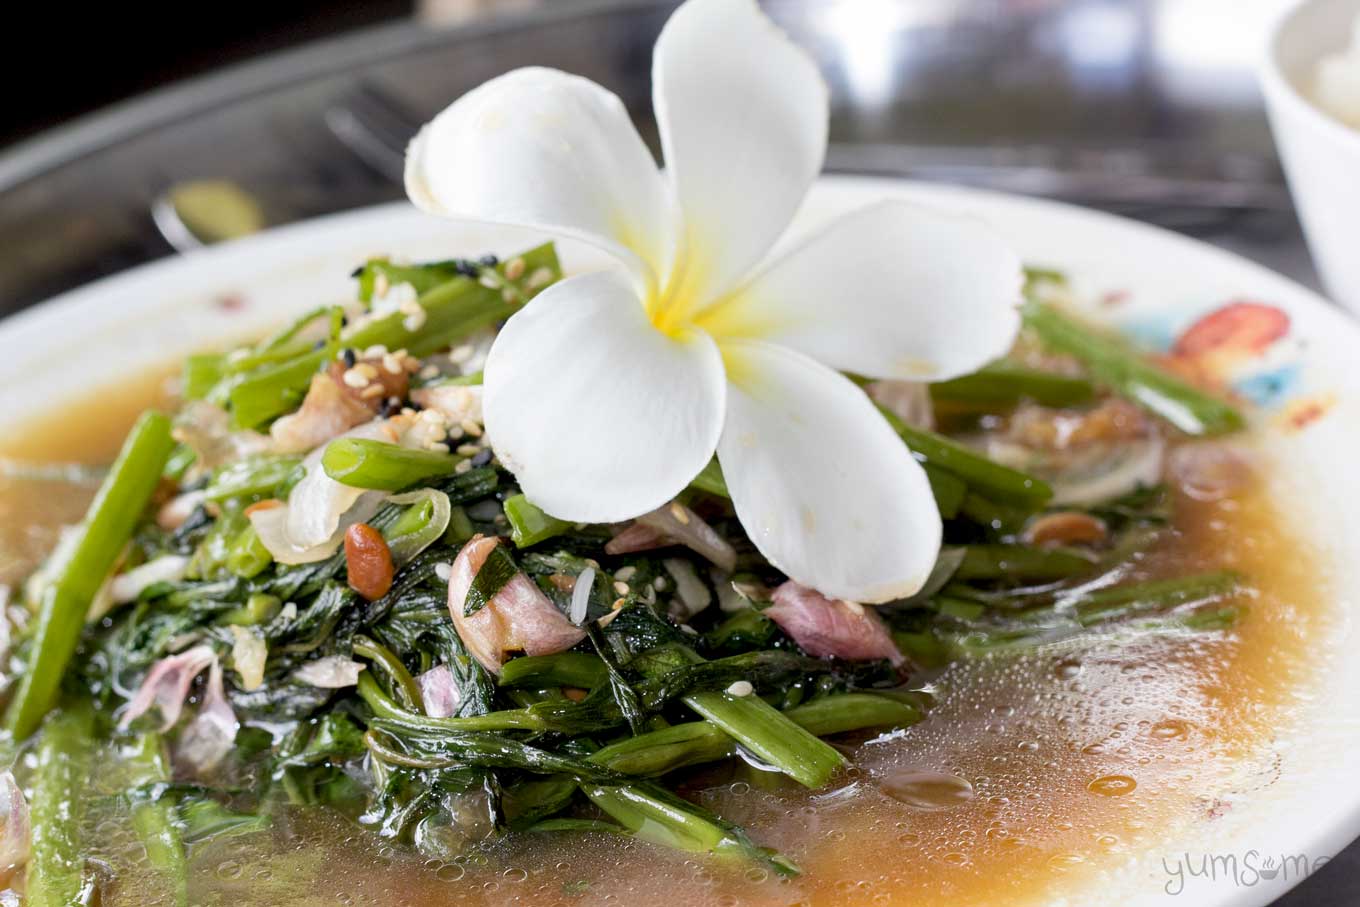 a plate of stir-fried morning glory with a frangipani flower | yumsome.com